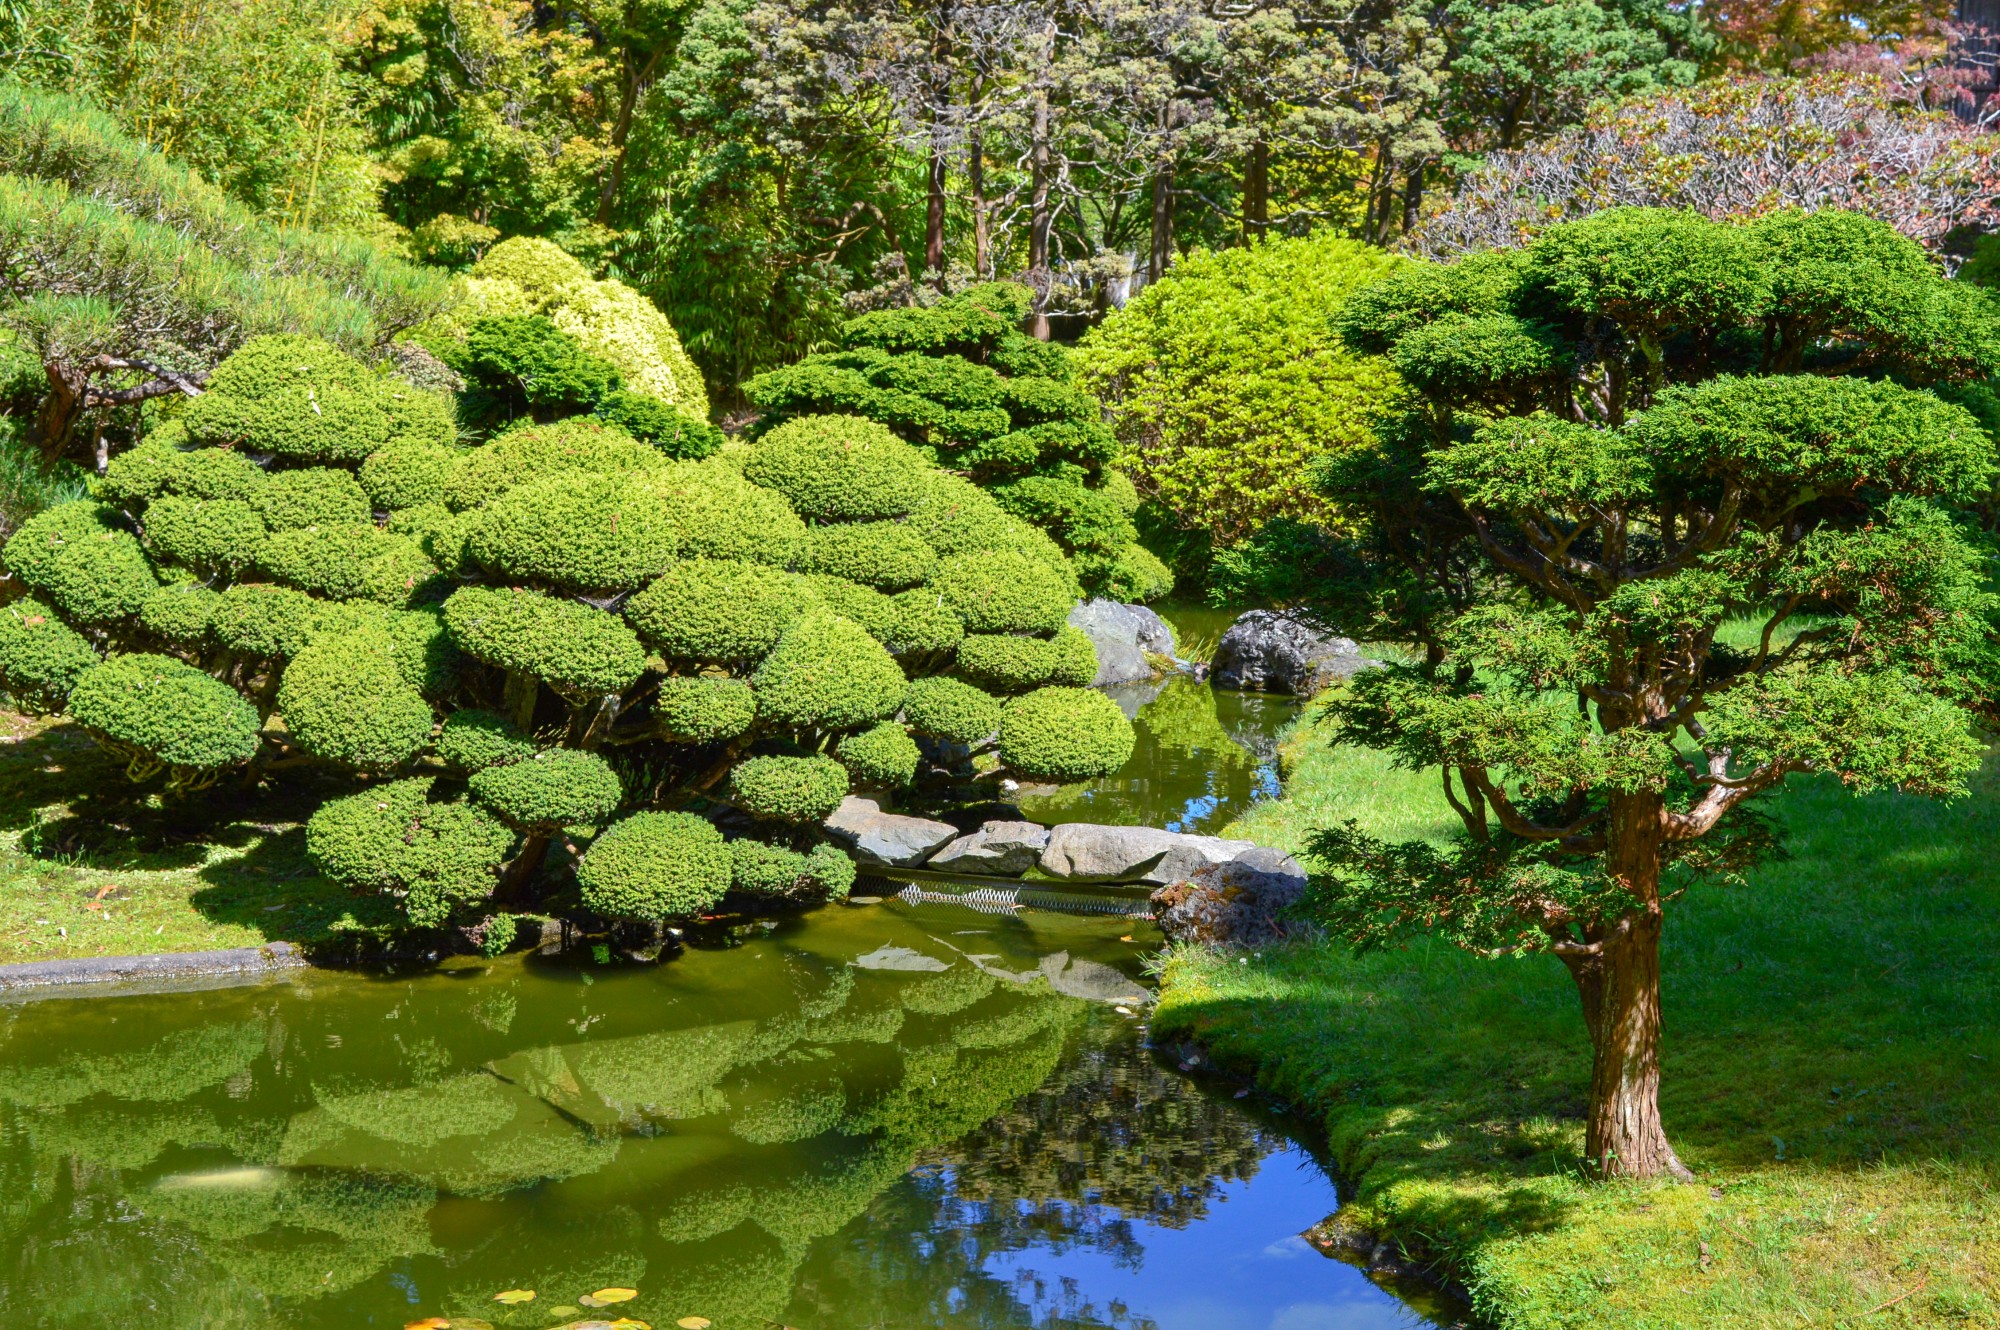 Japanese Garden in the Golden Gate Park, San Francisco